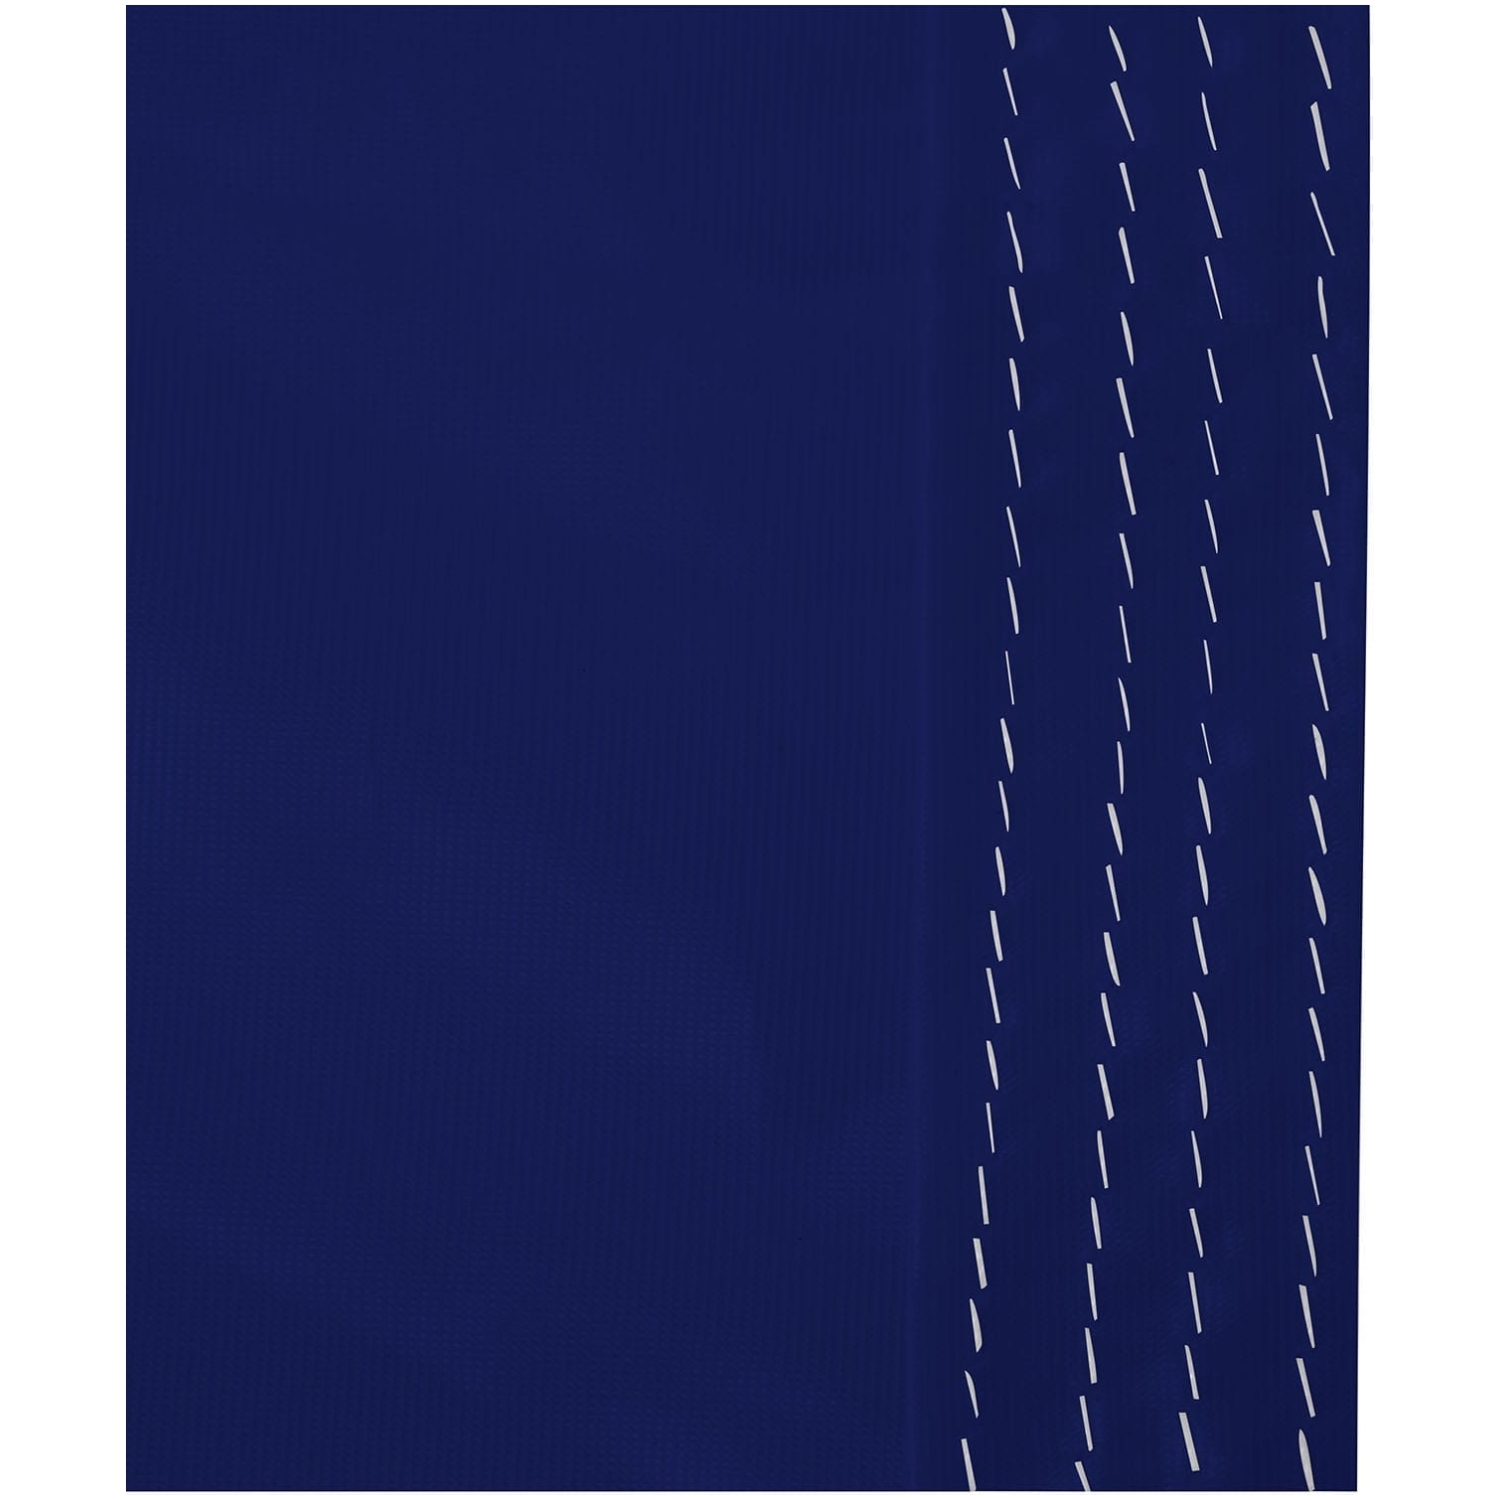 Spirit Flag Kit (double-sided) – 3′ X 5′